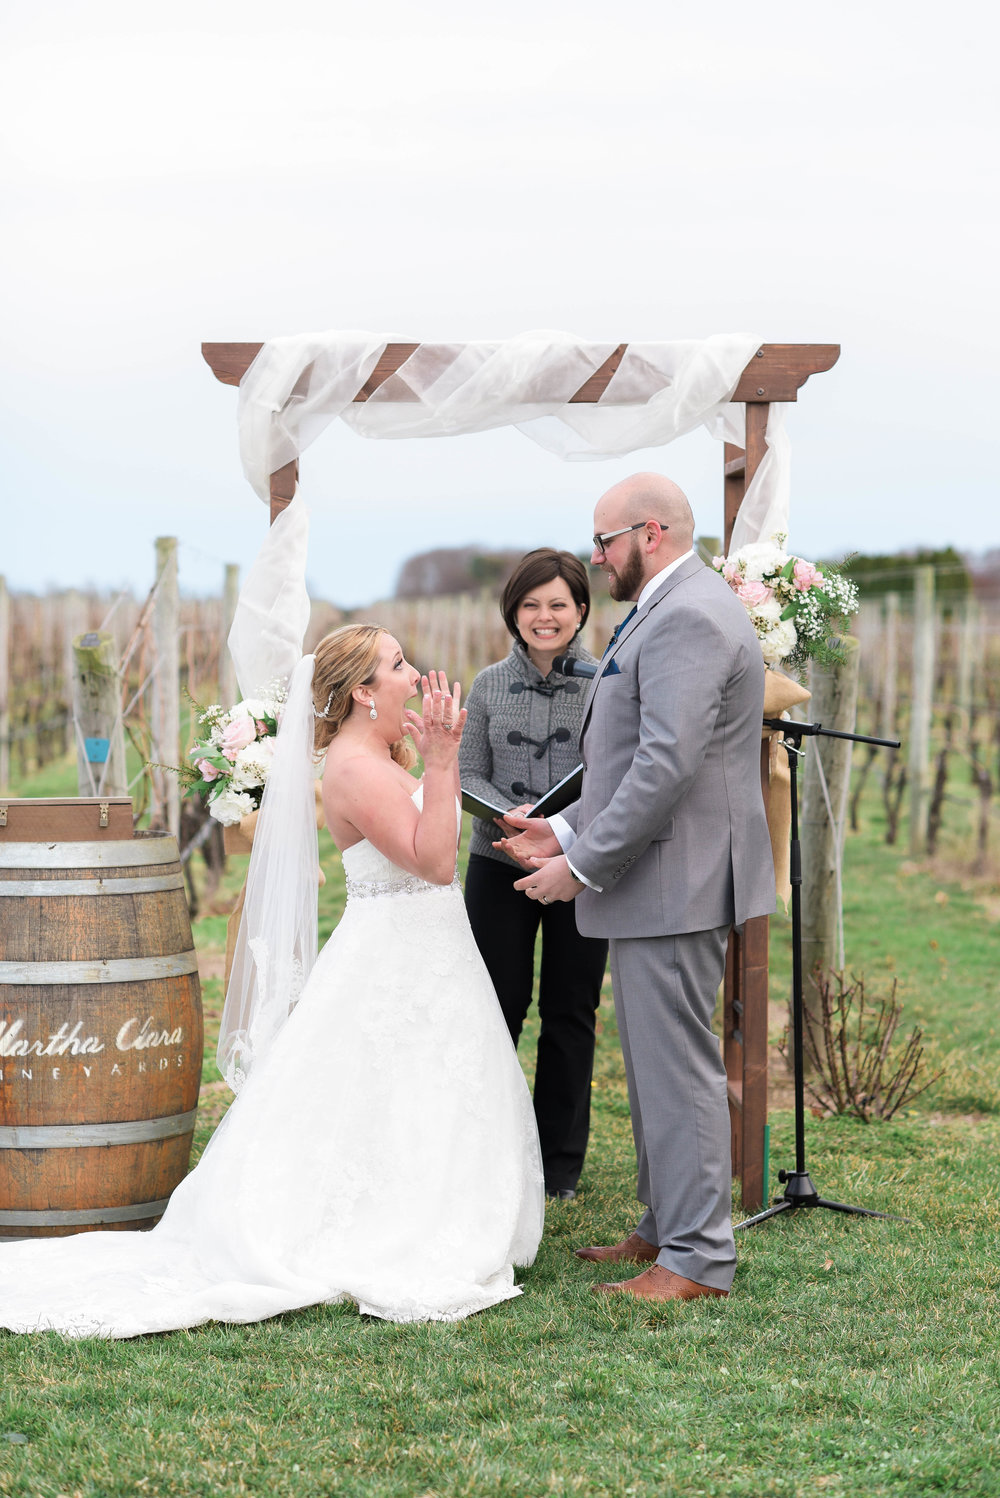 Martha-Clara-Wedding-Ceremony-Your-Story-Ceremonies-Danielle-Giannone-Paper-Hearts-Photography-11.jpg